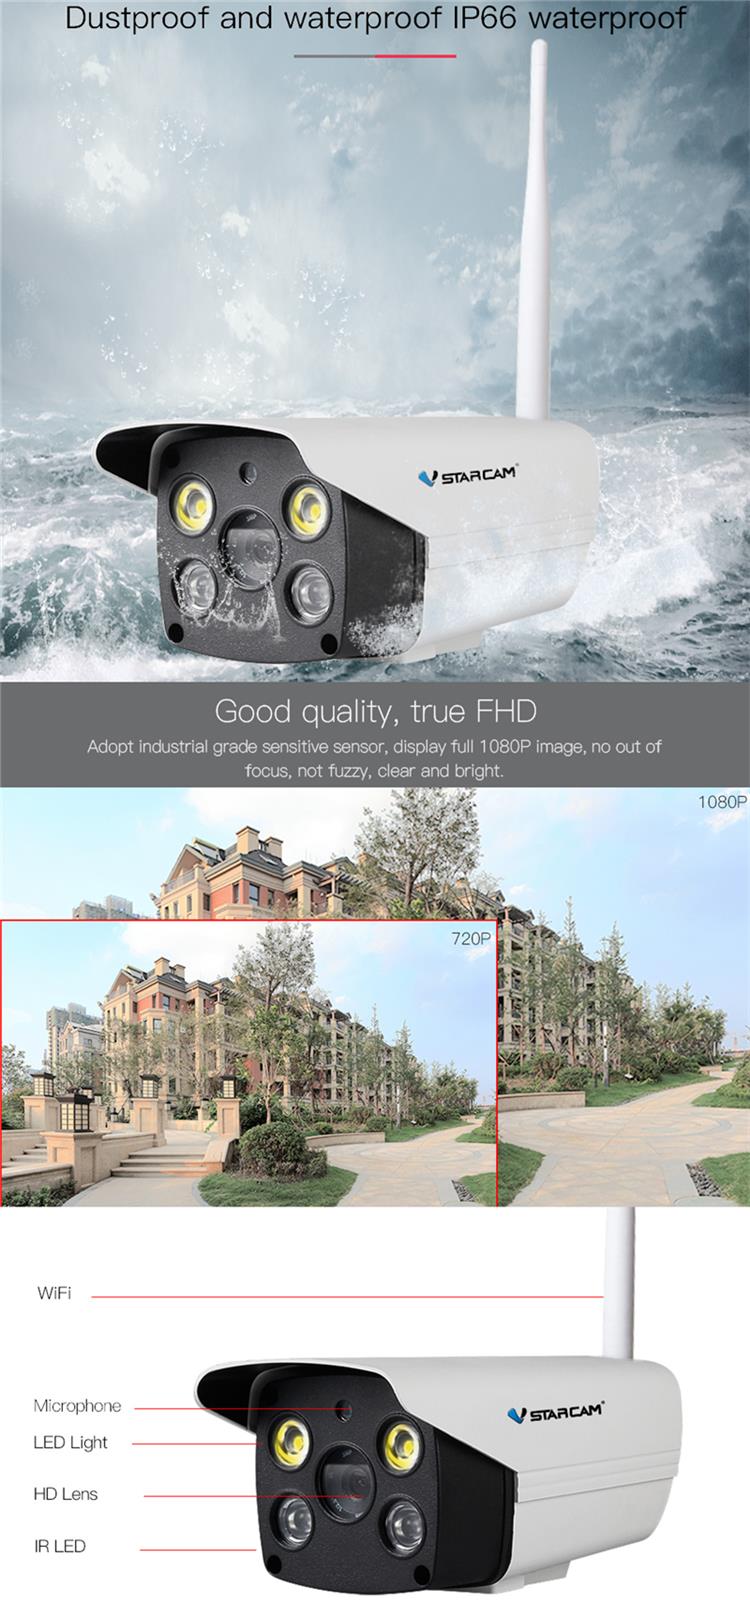 Vstarcam-C18S-Waterproof-IP-WiFi-Camera-AP-Hots-Motion-Detect-Alarm-Push-IR-CCTV-1312710